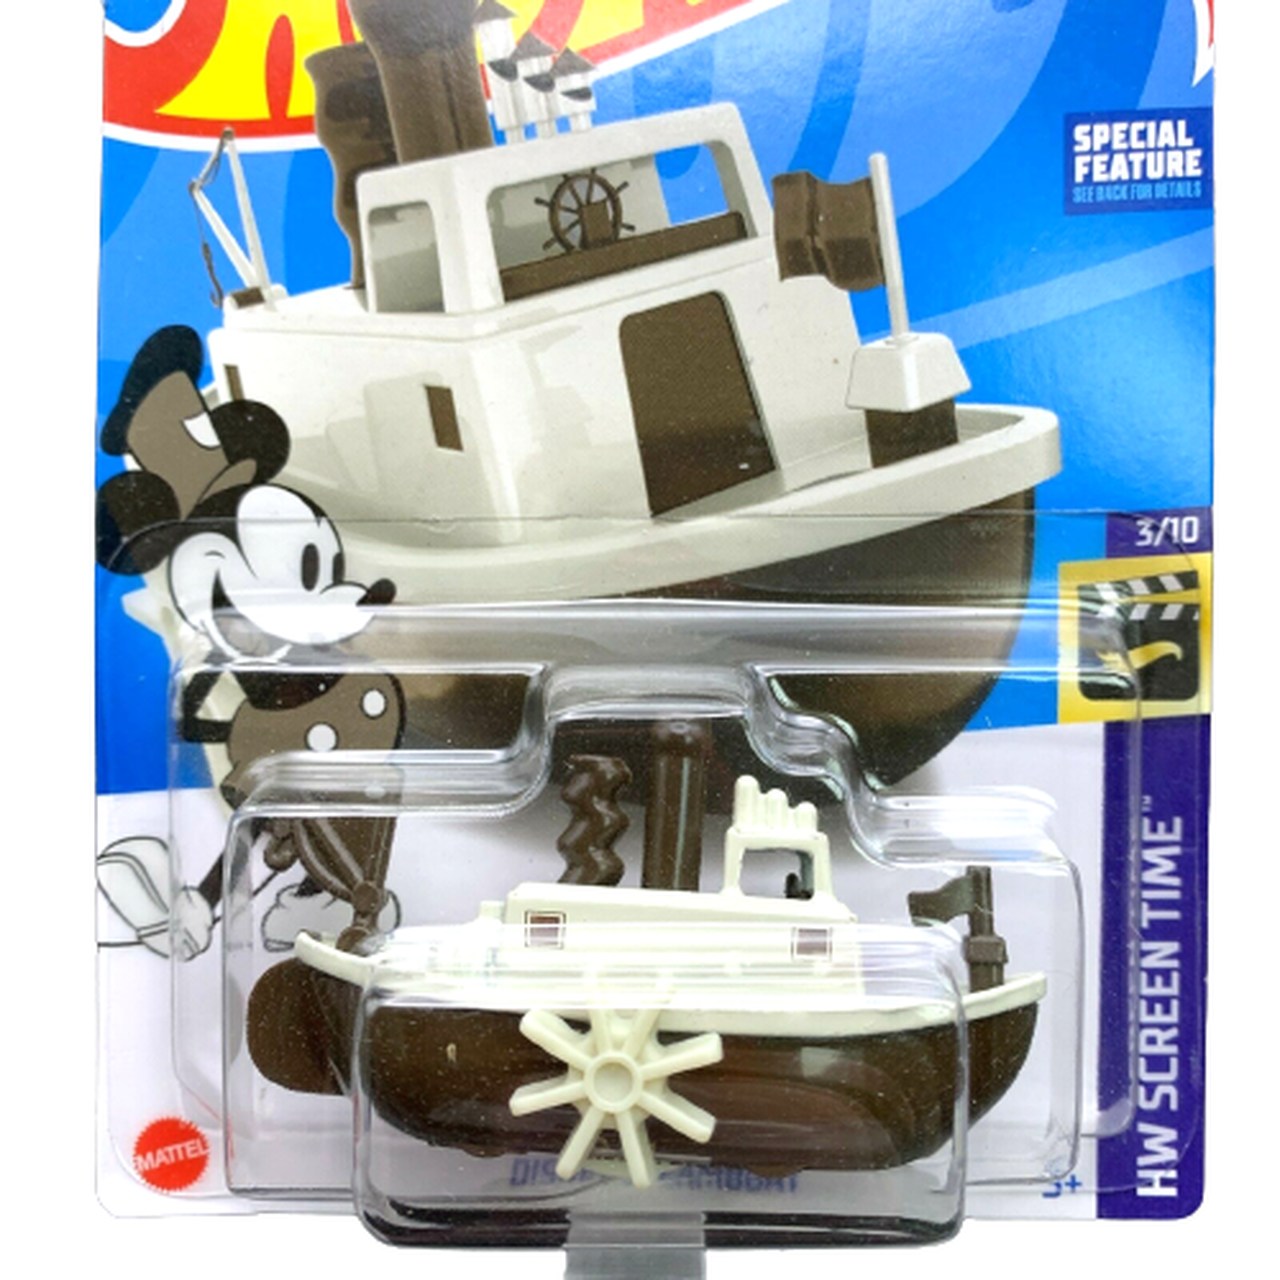 Carrinho Hot Wheels Mickey Mouse Disney Steamboat - Mattel